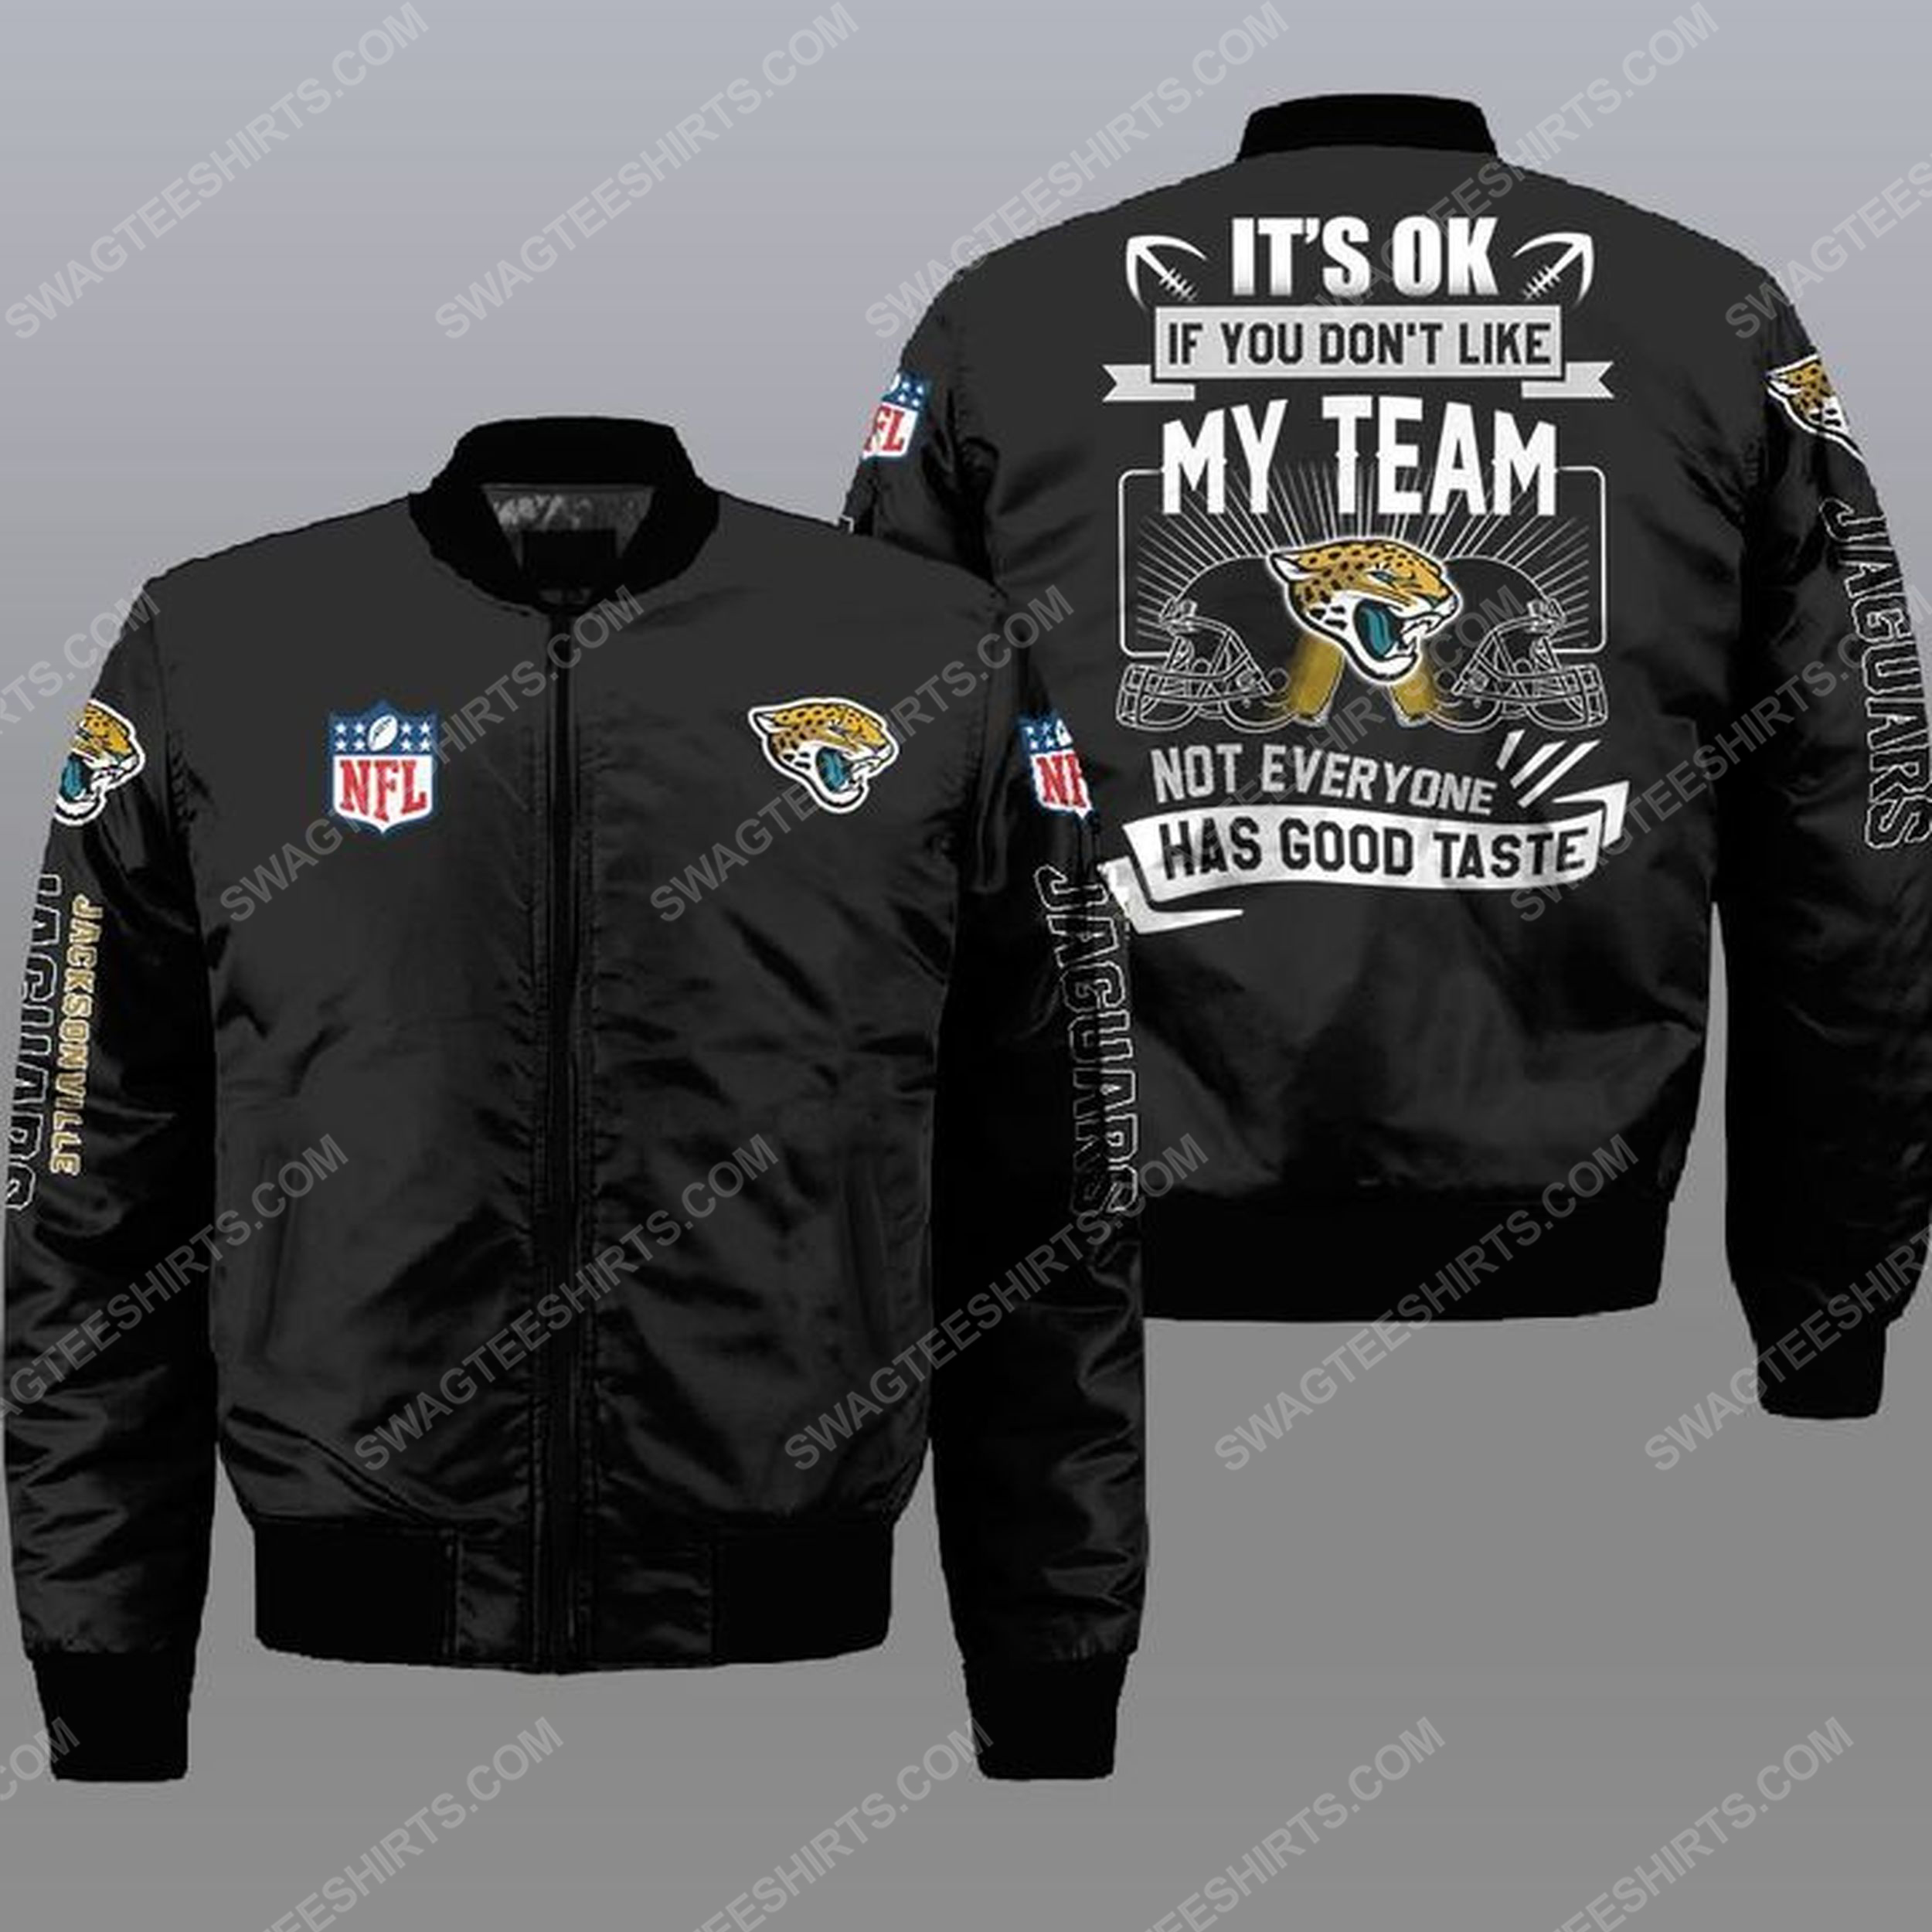 It's ok if you don't like my team jacksonville jaguars all over print bomber jacket - black 1